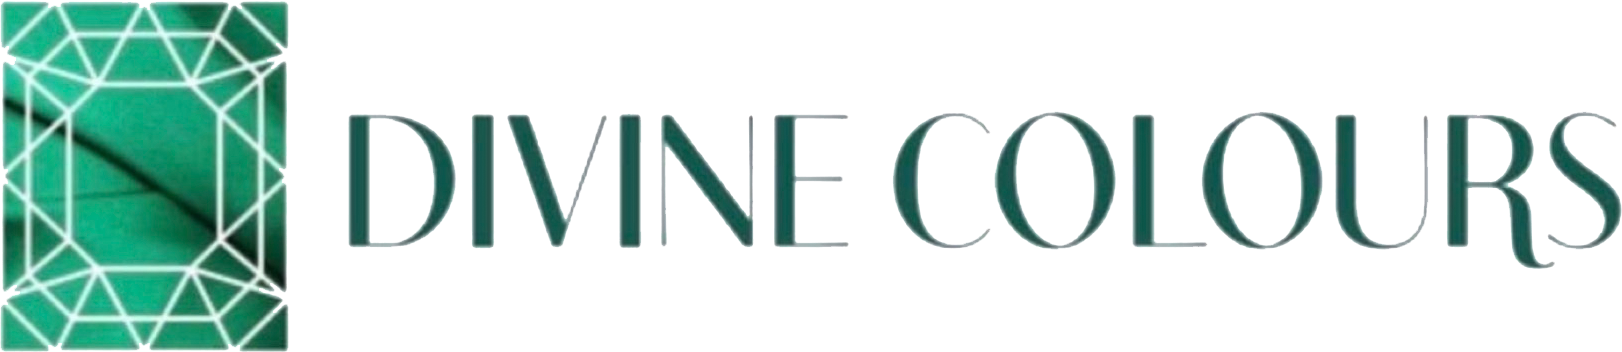 Divine Colours - Header logo image transparent